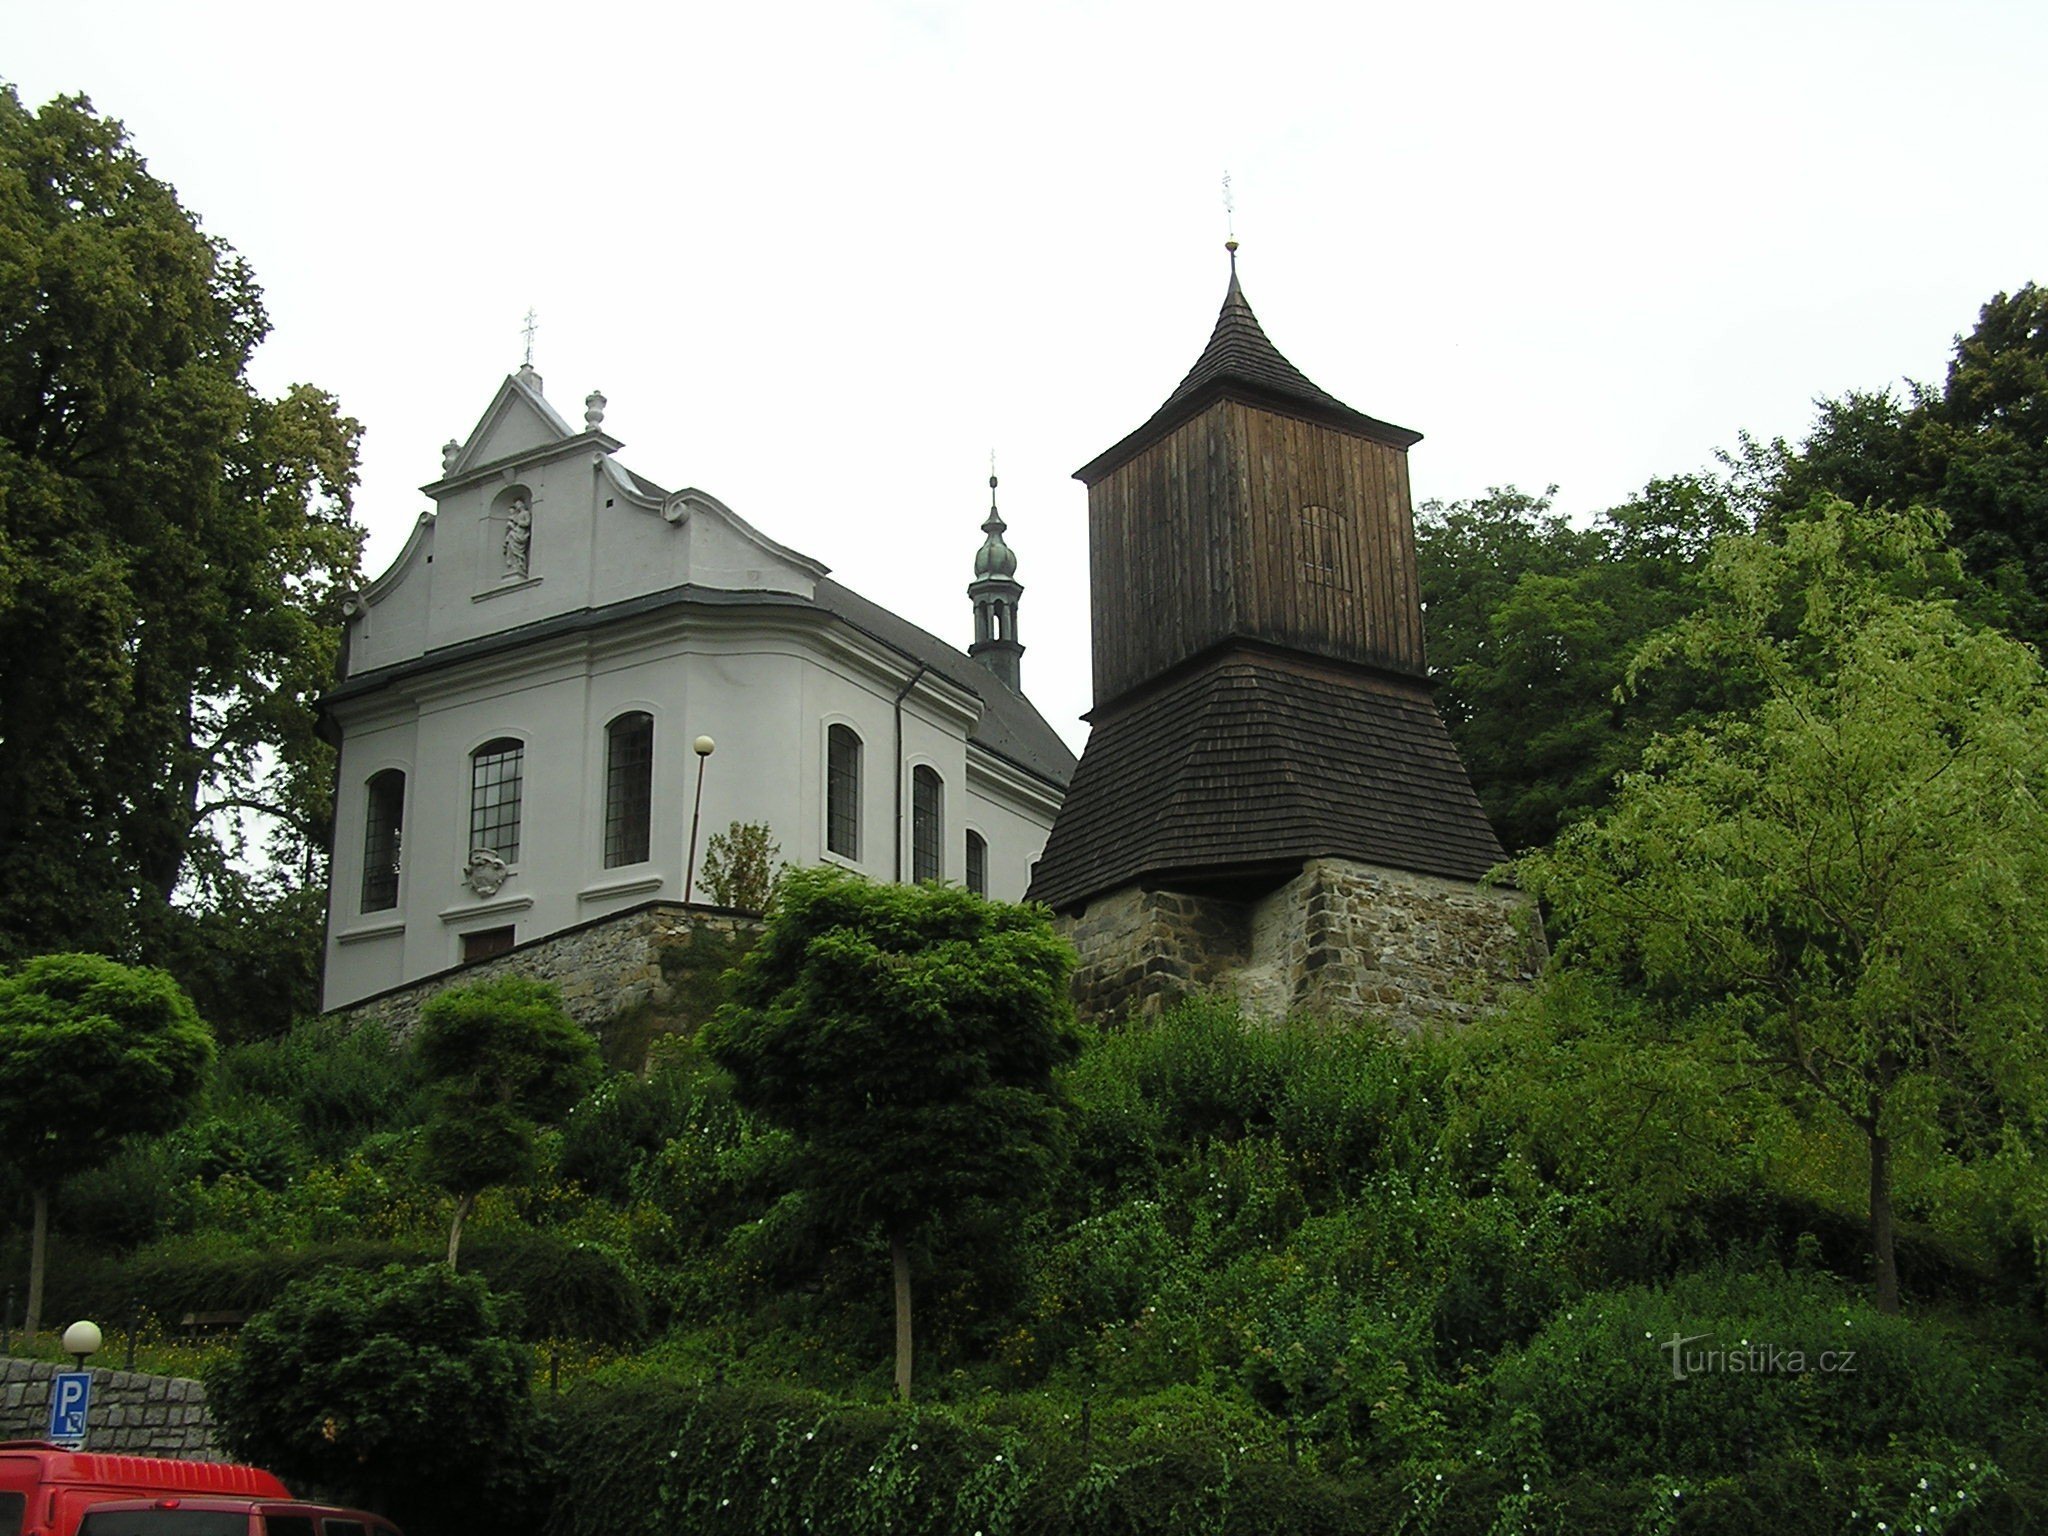 Tempel des Hl. Jakob mit dem Glockenturm 7/2015